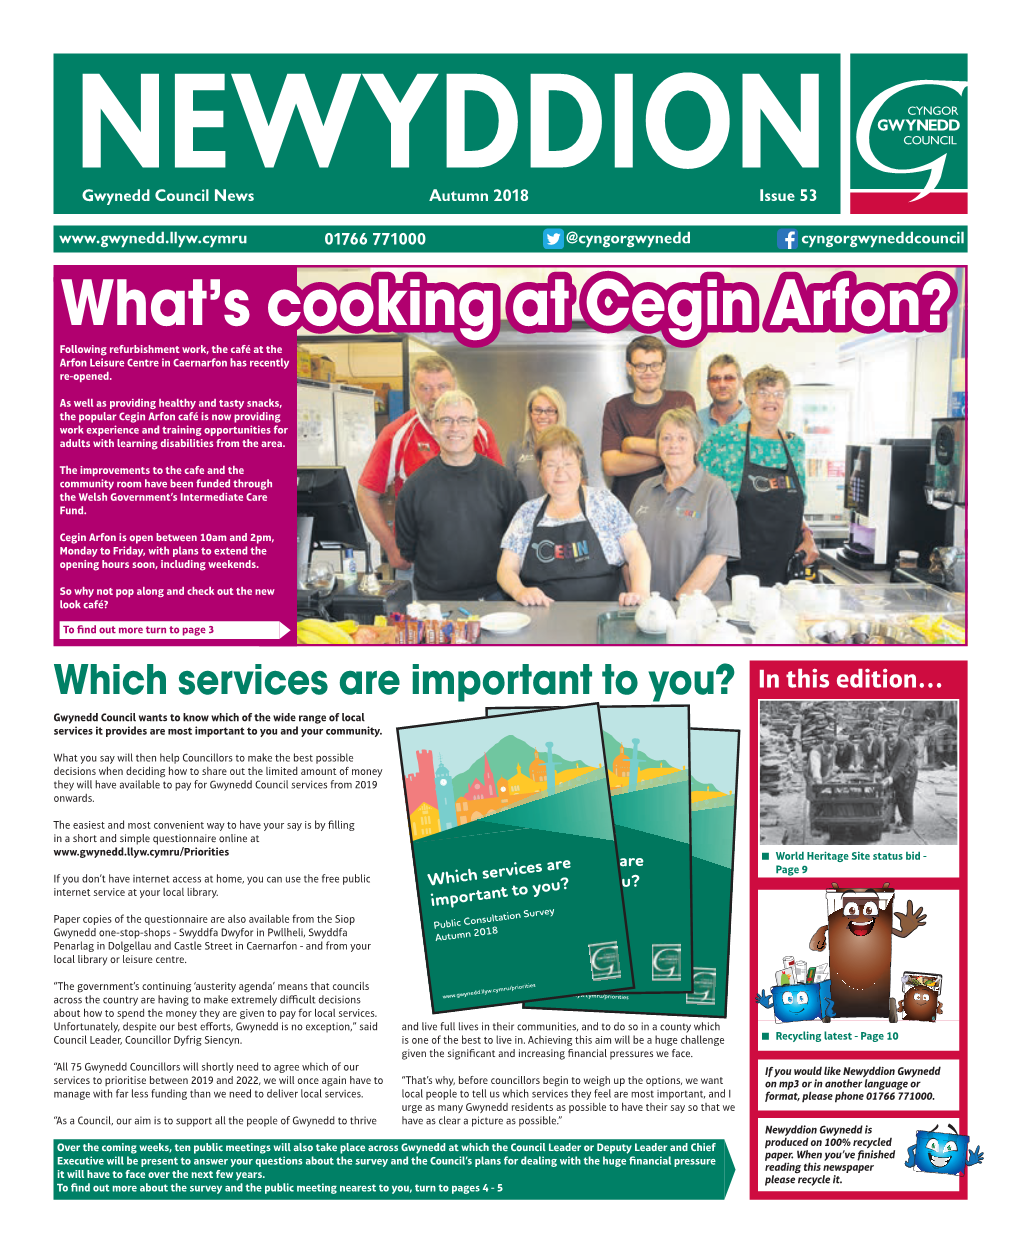 What's Cooking at Cegin Arfon?